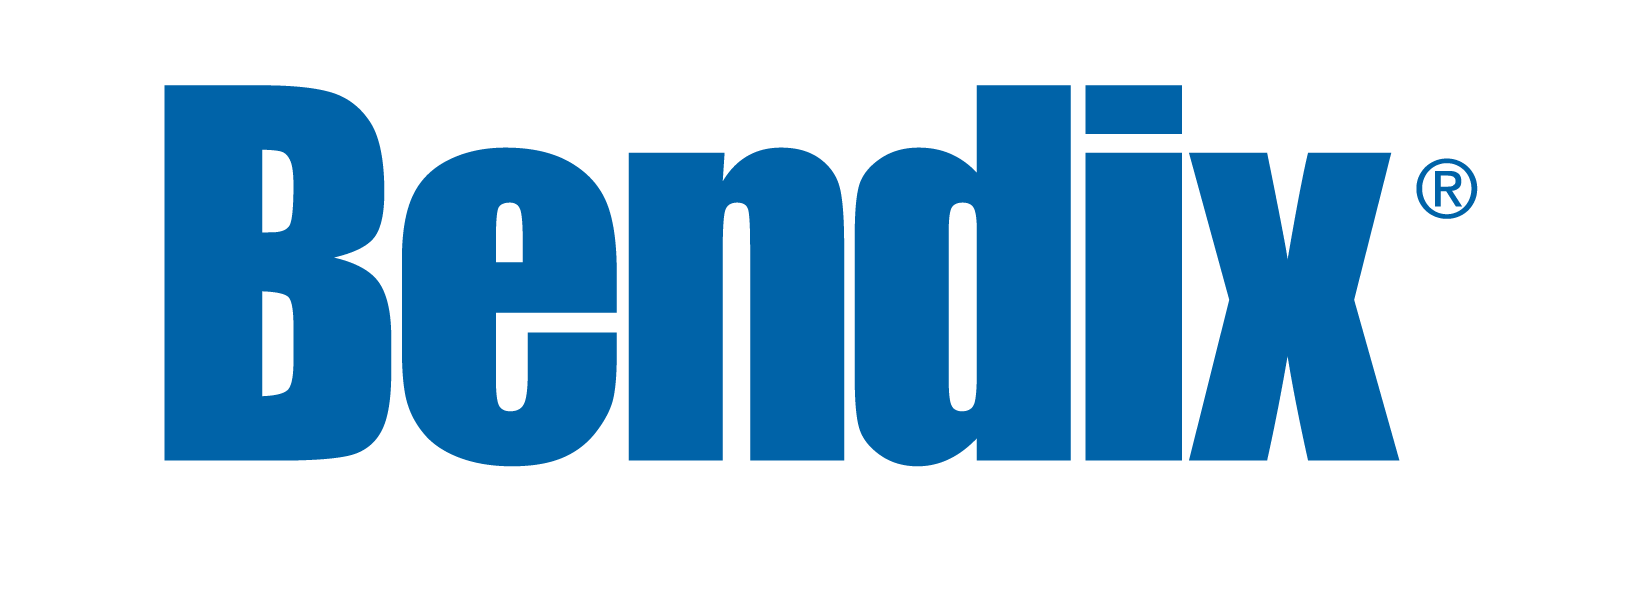 Bendix Logo - Bendix logo png » PNG Image